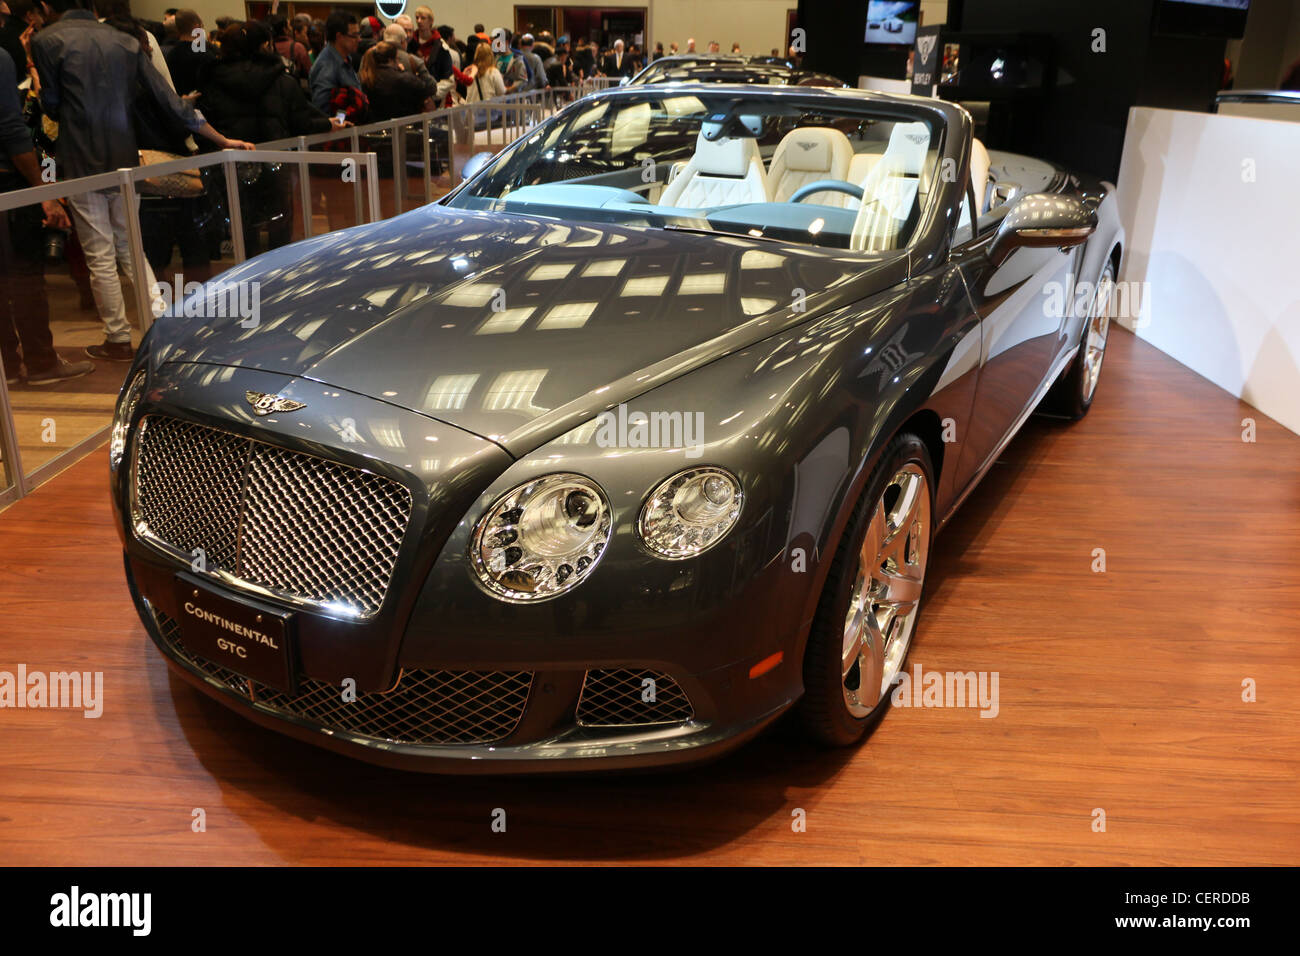 bentley car luxury expensive Stock Photo